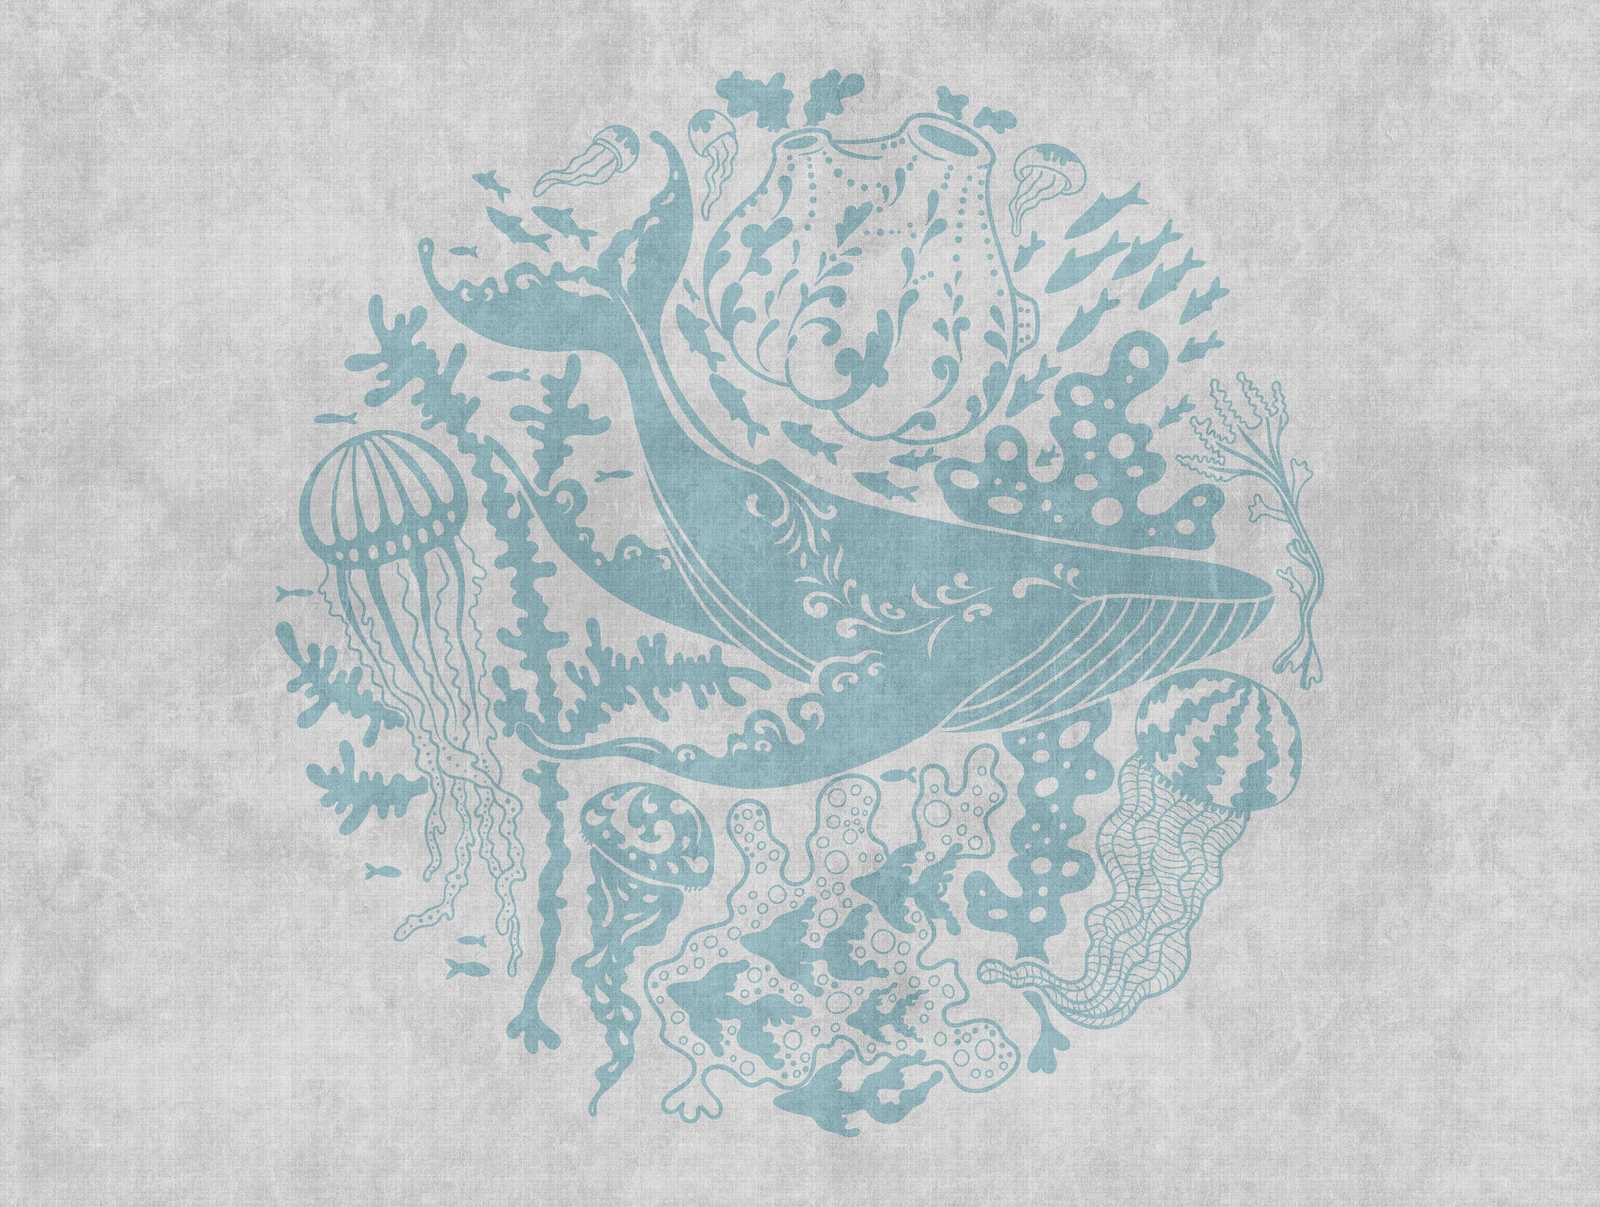             Wallpaper novelty | motif wallpaper underwater whale, jellyfish & coral
        